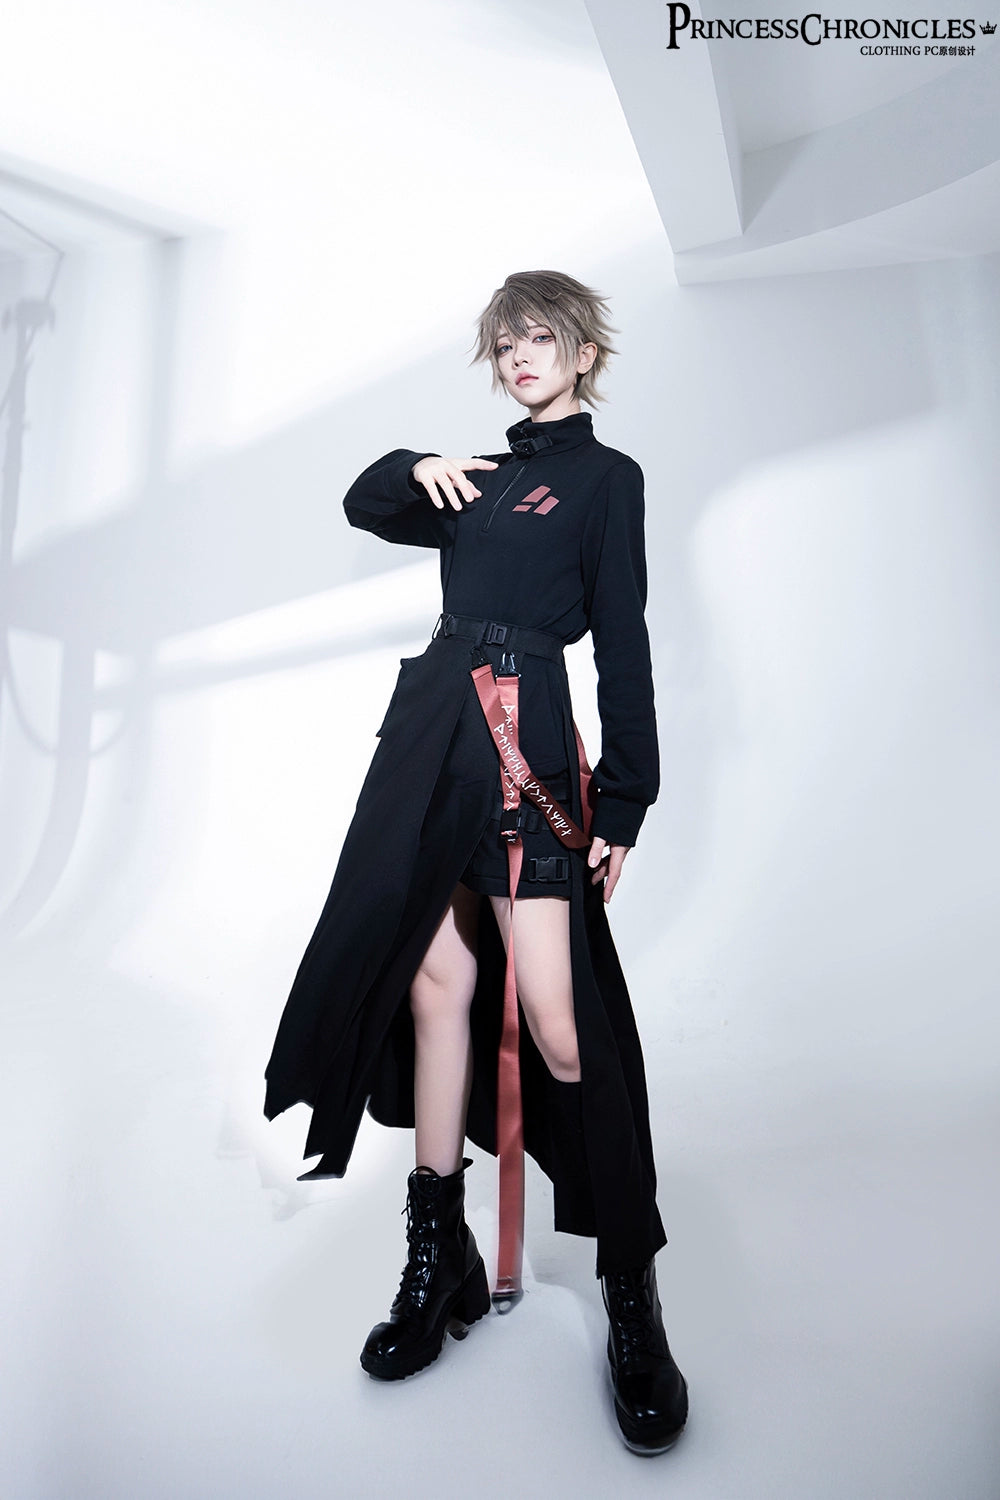 Princess Chronicles~Nameless Blade~Waste Soil Ouji Lolita Black Skirt   